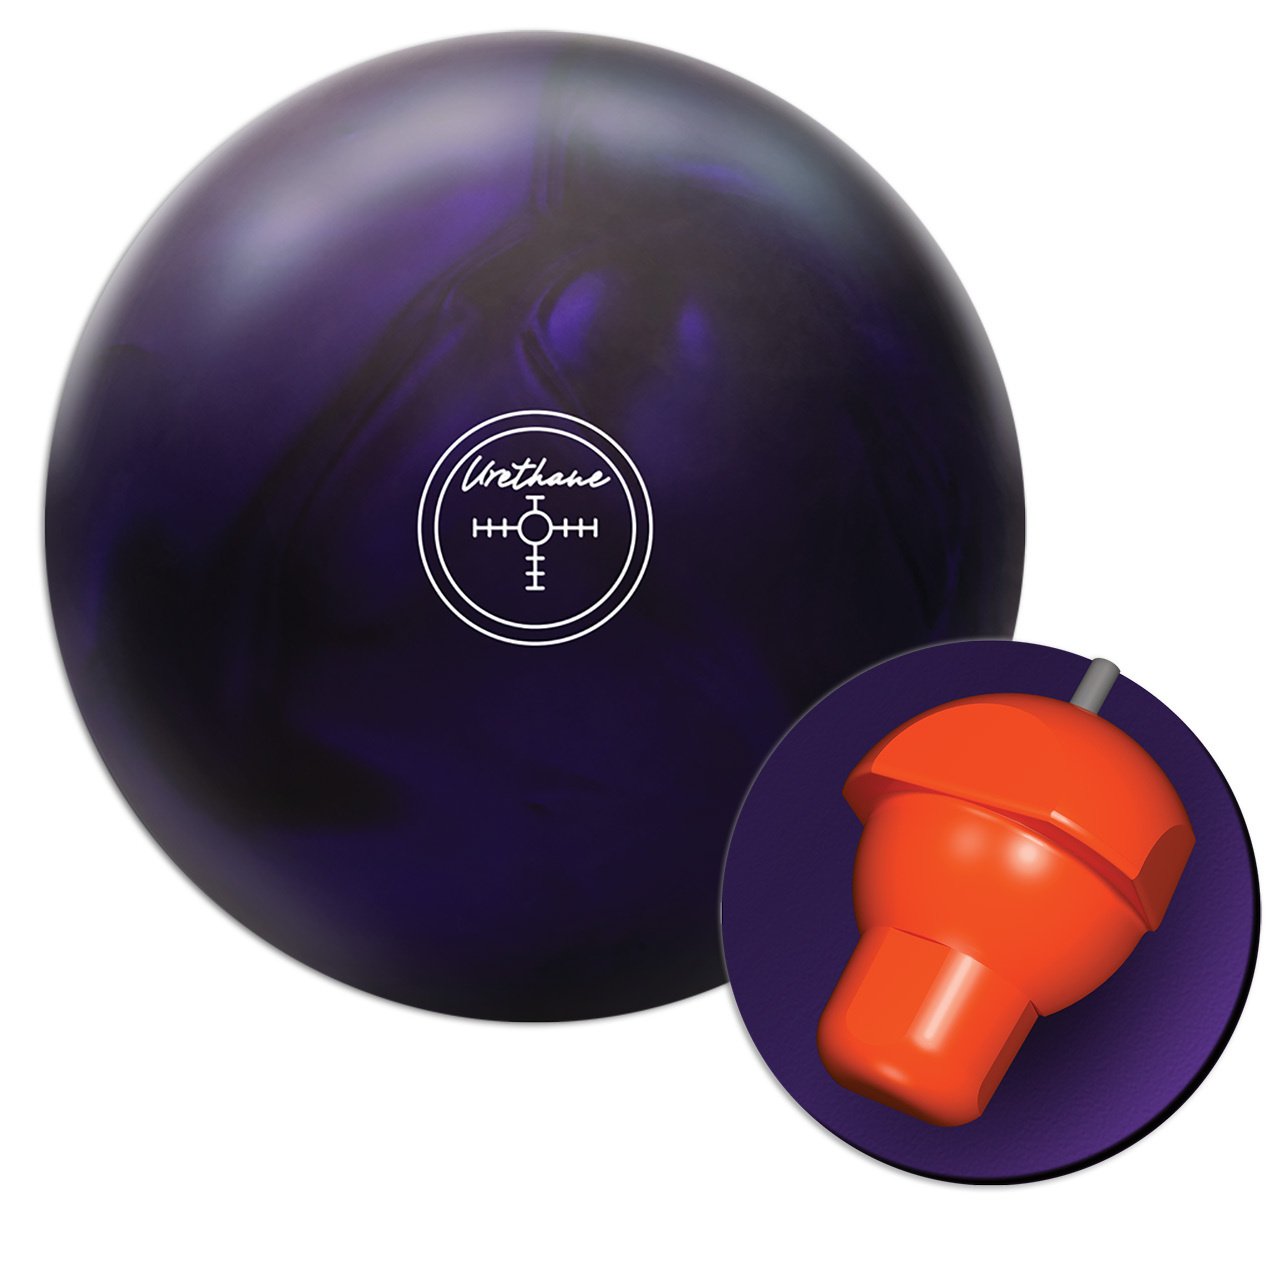 Hammer Purple Pearl Hammer Urethane | BowlingShopEurope